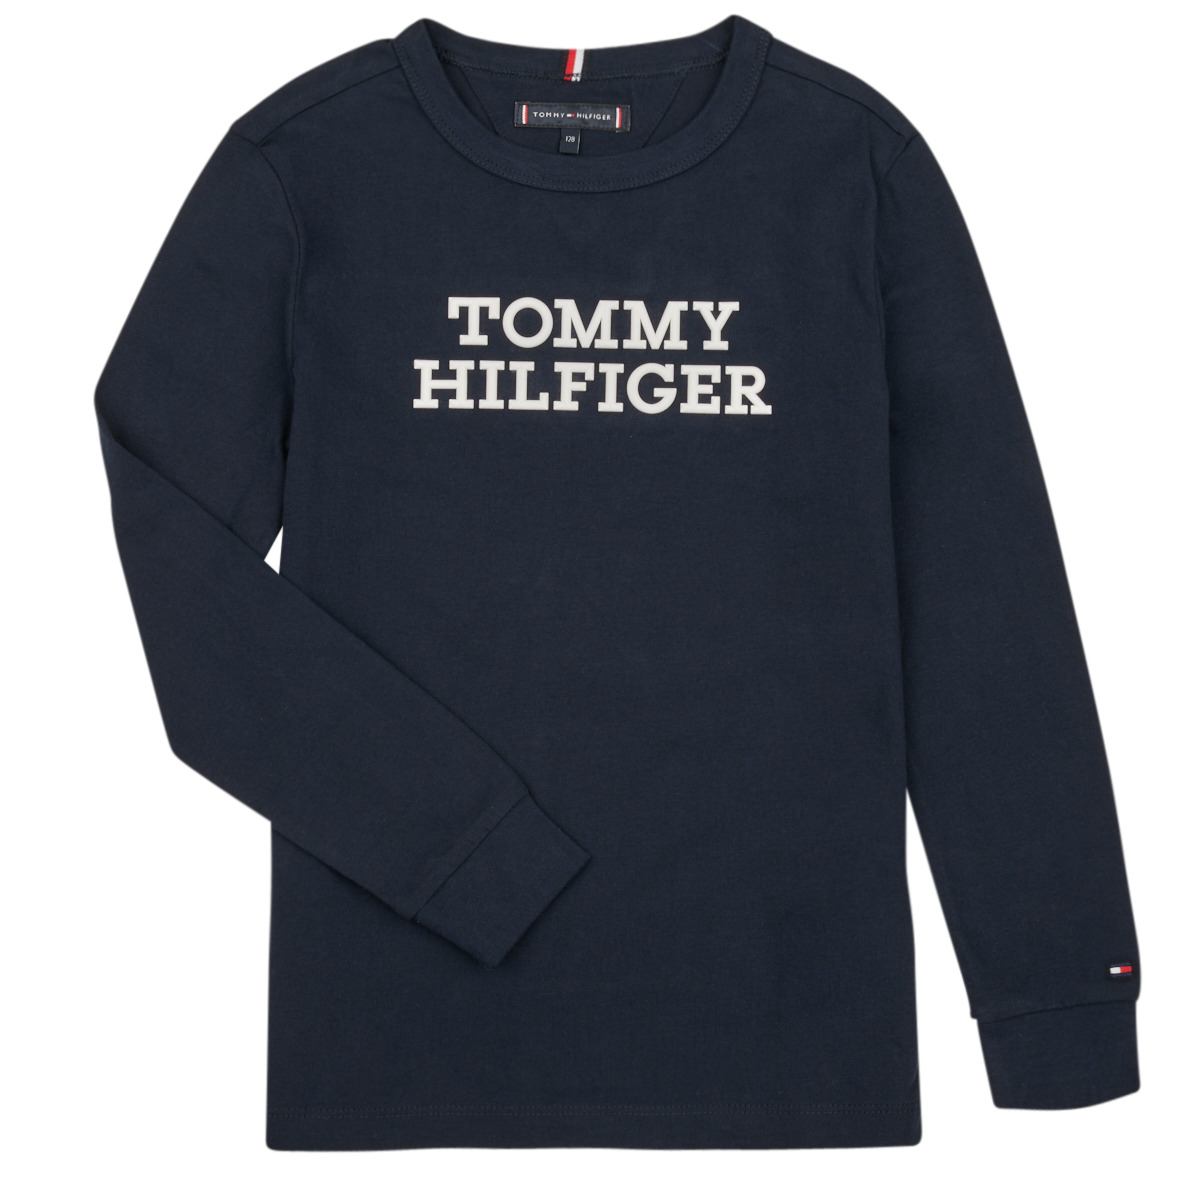 Tommy Hilfiger Marine TOMMY HILFIGER LOGO TEE L/S SAmm6